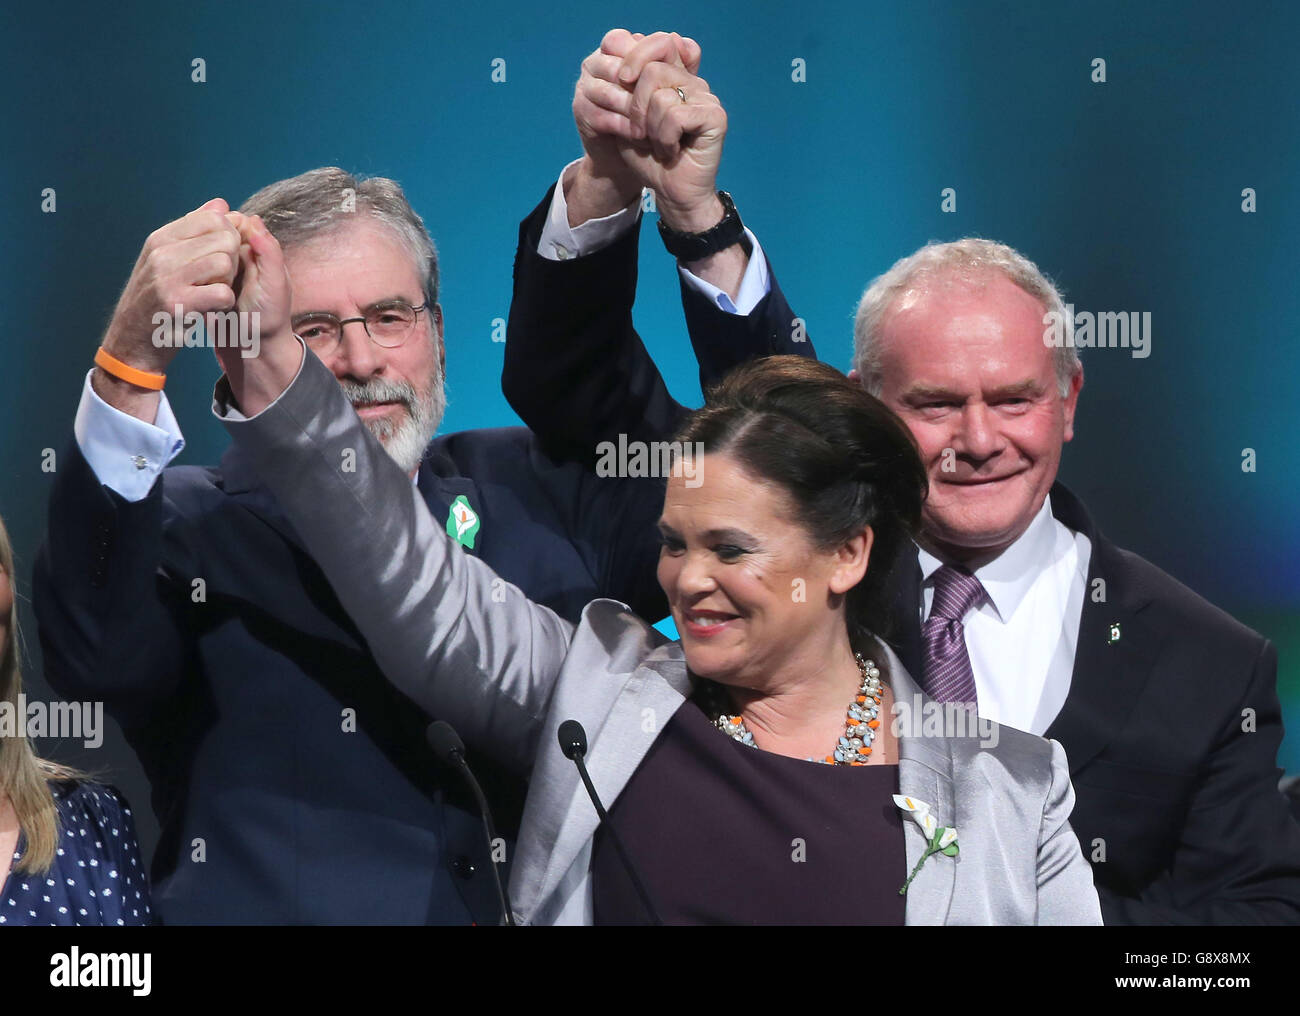 (left to right) Sinn Fein president Gerry Adams, Vice-President of Sinn Fein Mary Lou McDonald, First Minister of Northern Ireland Martin McGuinness at the Sinn Fein ard fheis at The Convention Centre in Dublin. Stock Photo